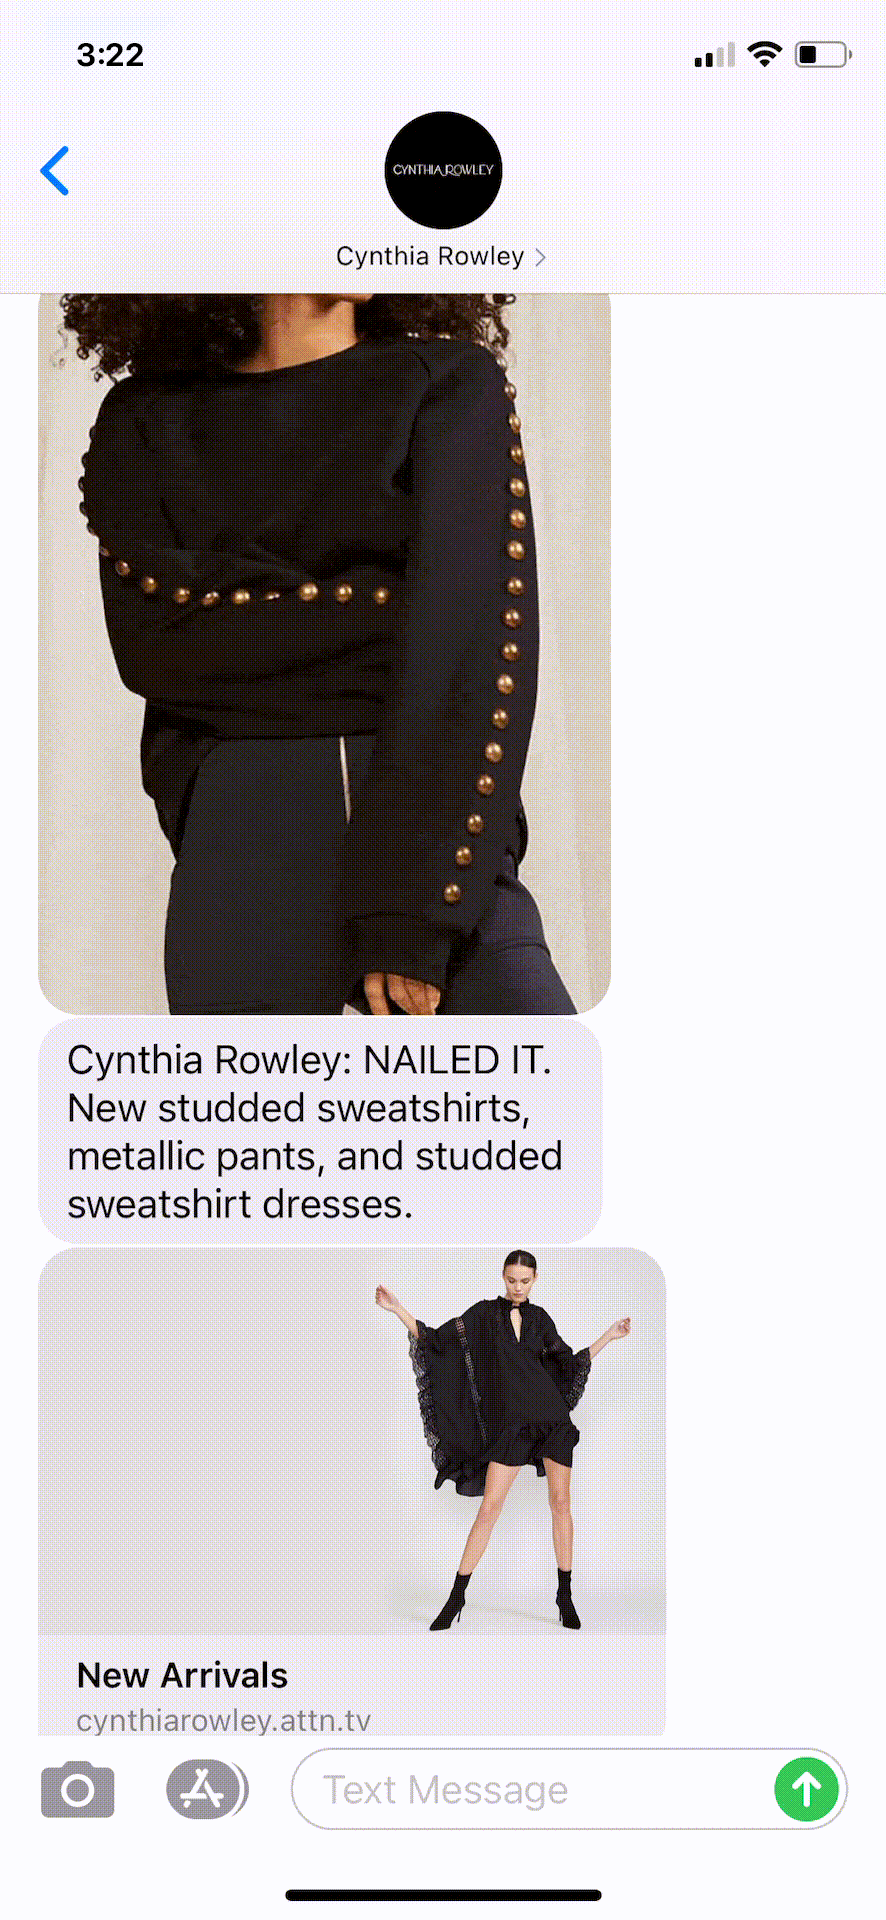 Cynthia-Rowley-Text-Message-Marketing-Example-02.10.2021